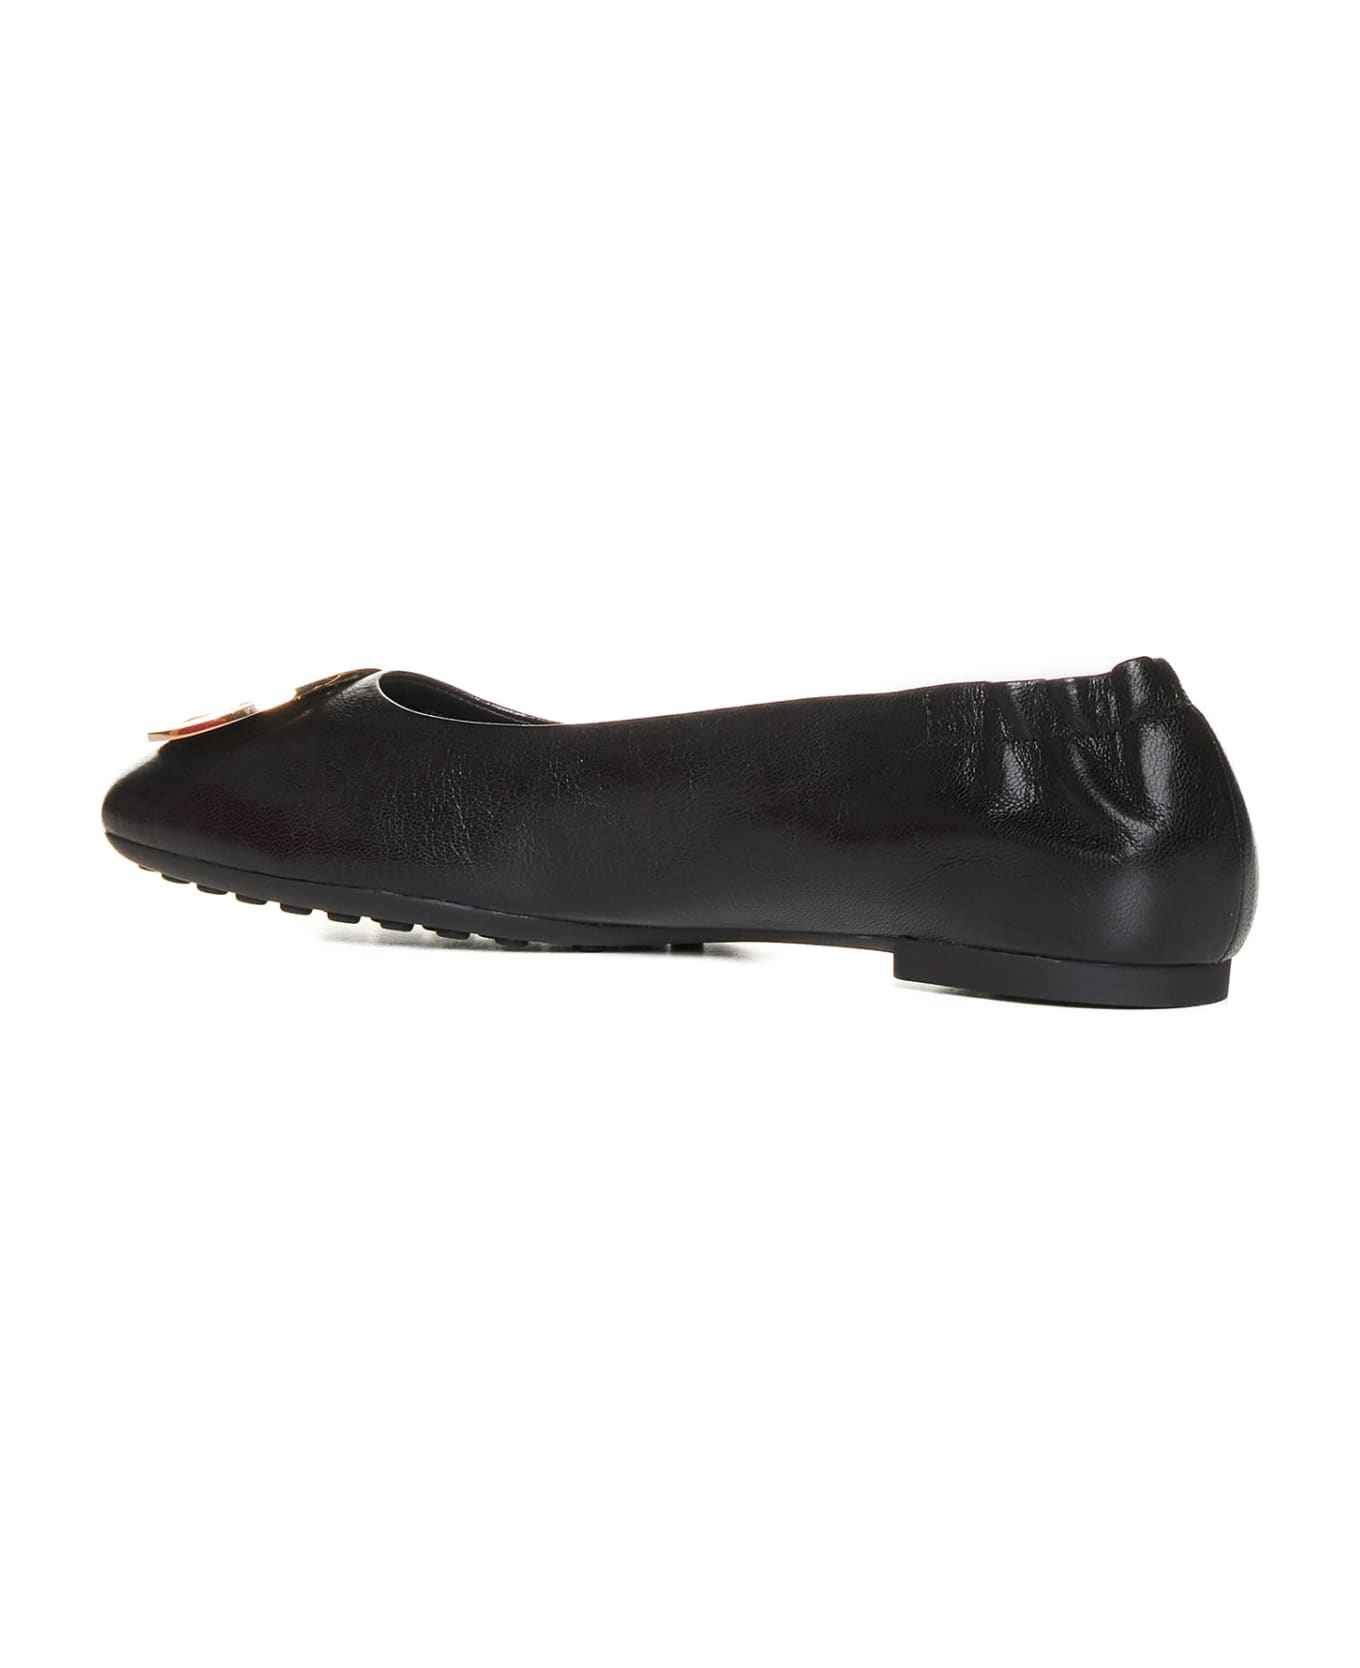 Tory Burch Flat Shoes - Perfect black